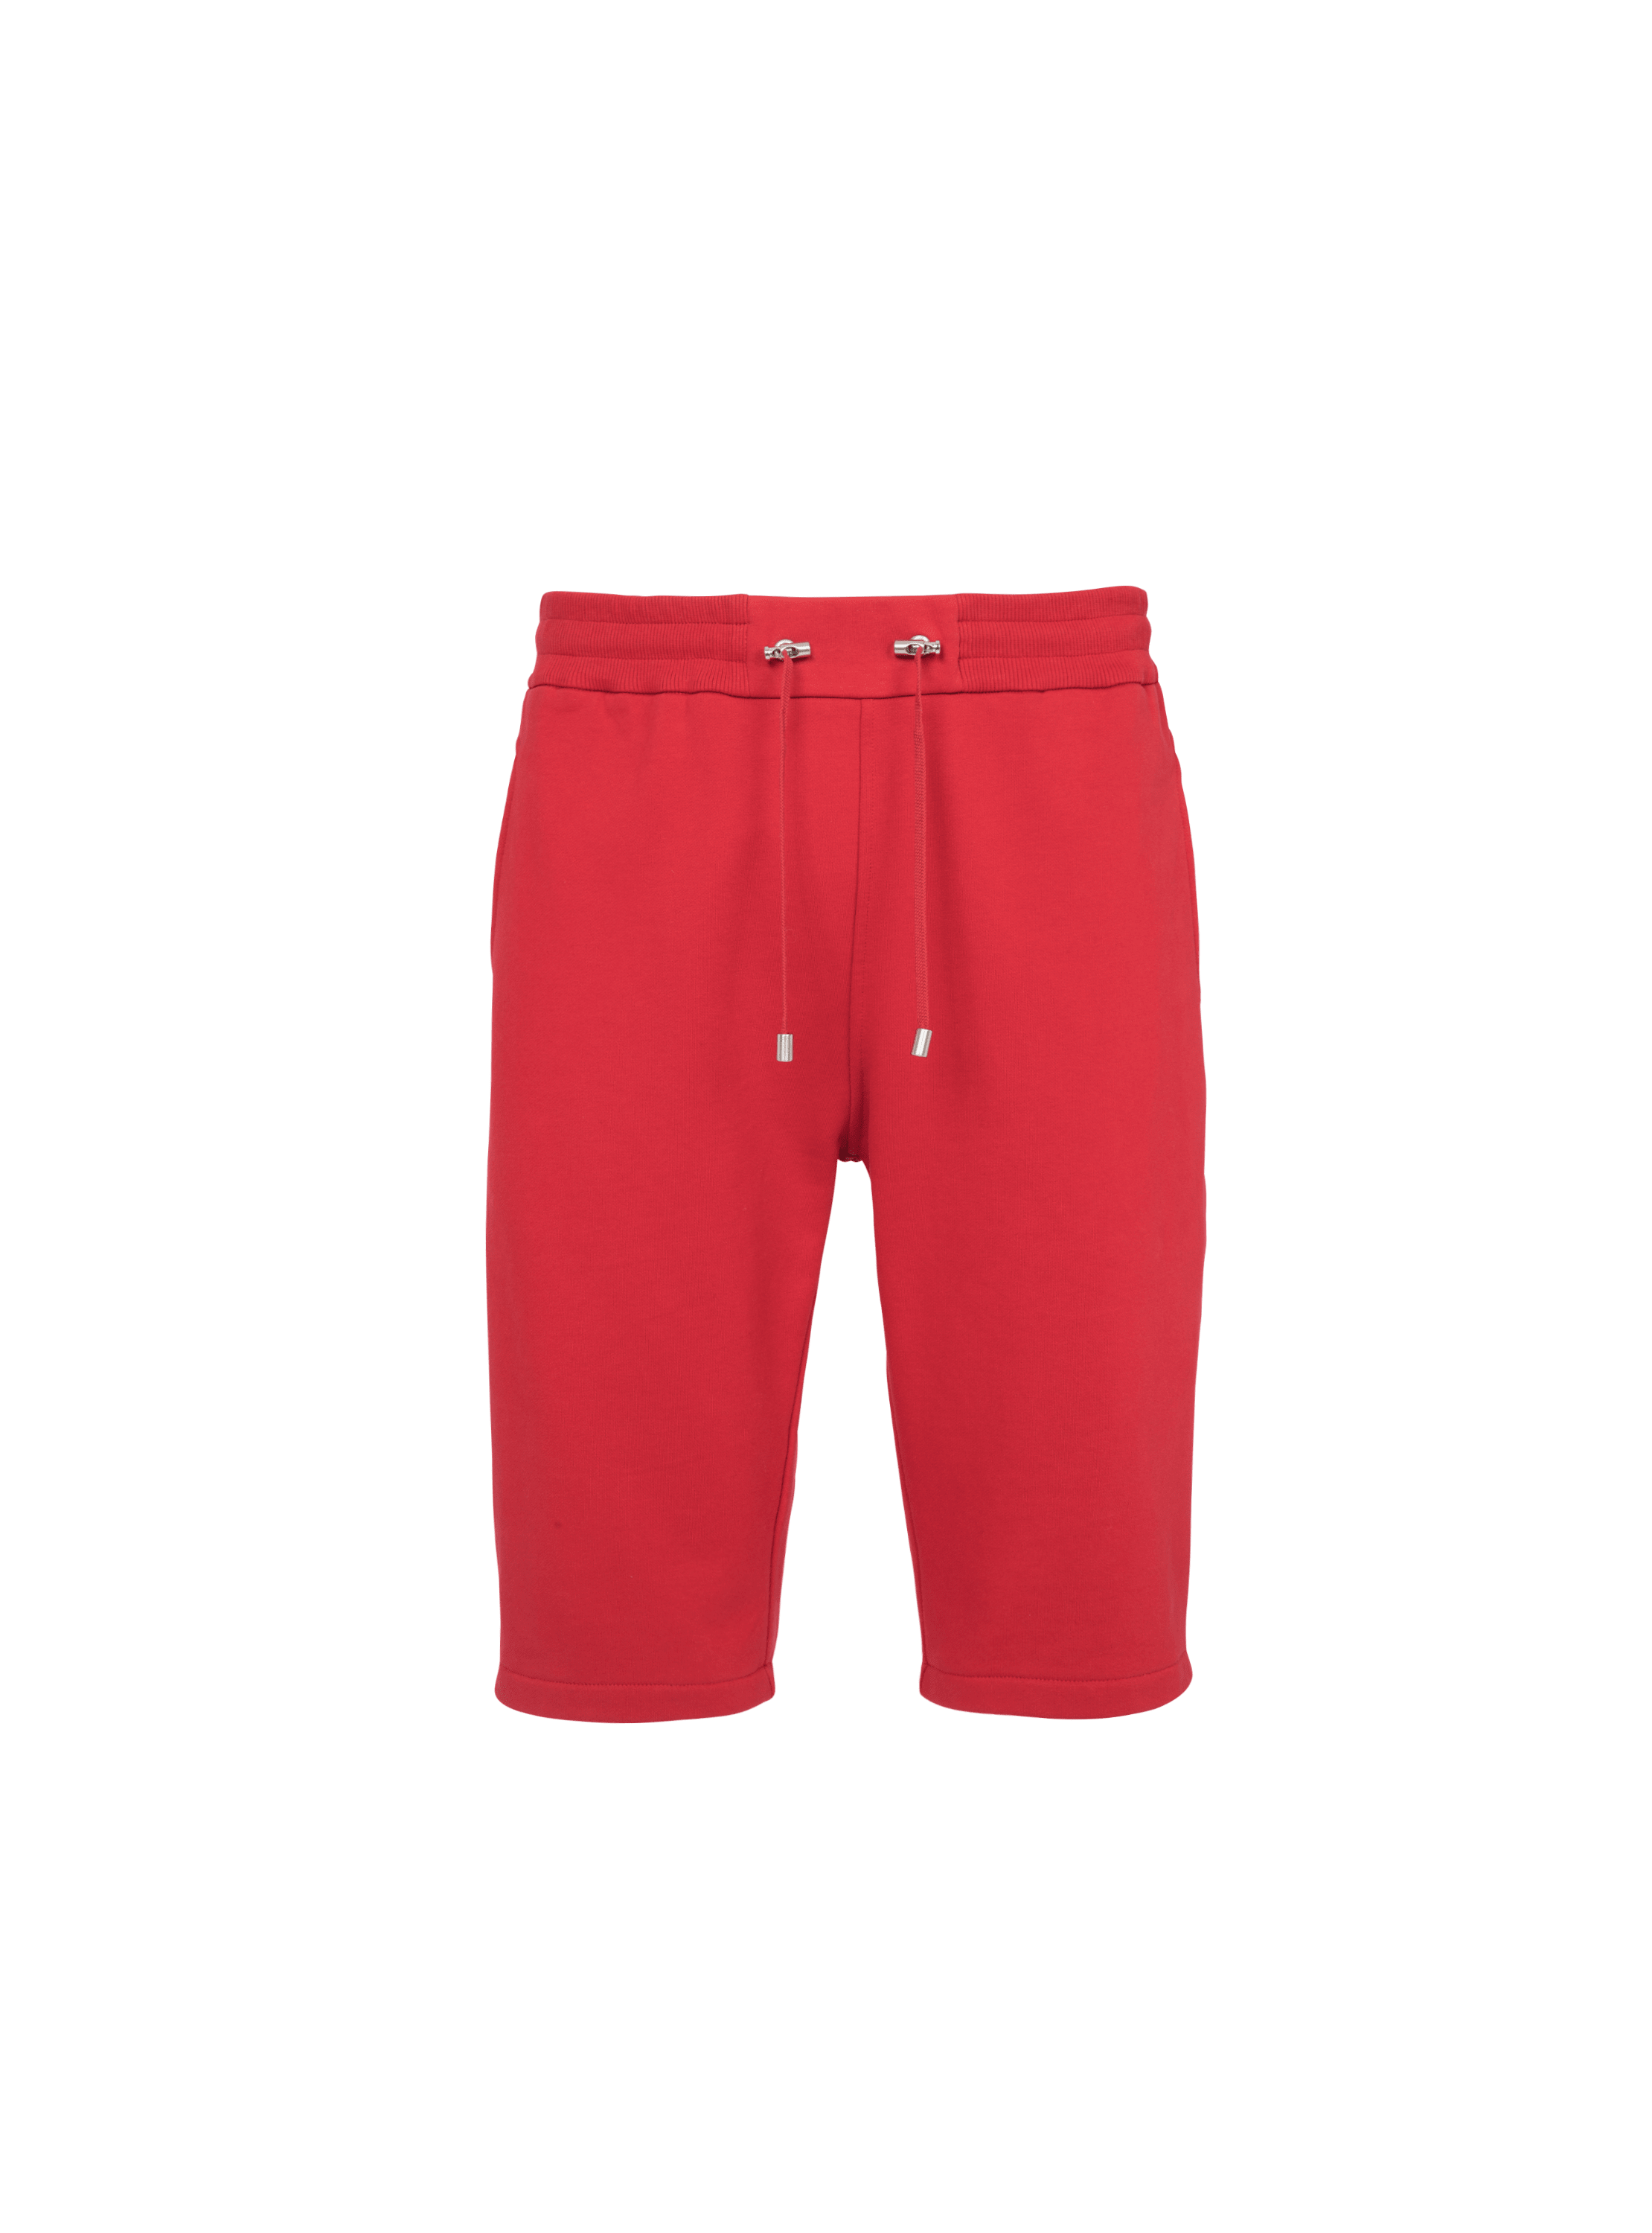 Cotton shorts with flocked Balmain Paris logo, red, hi-res